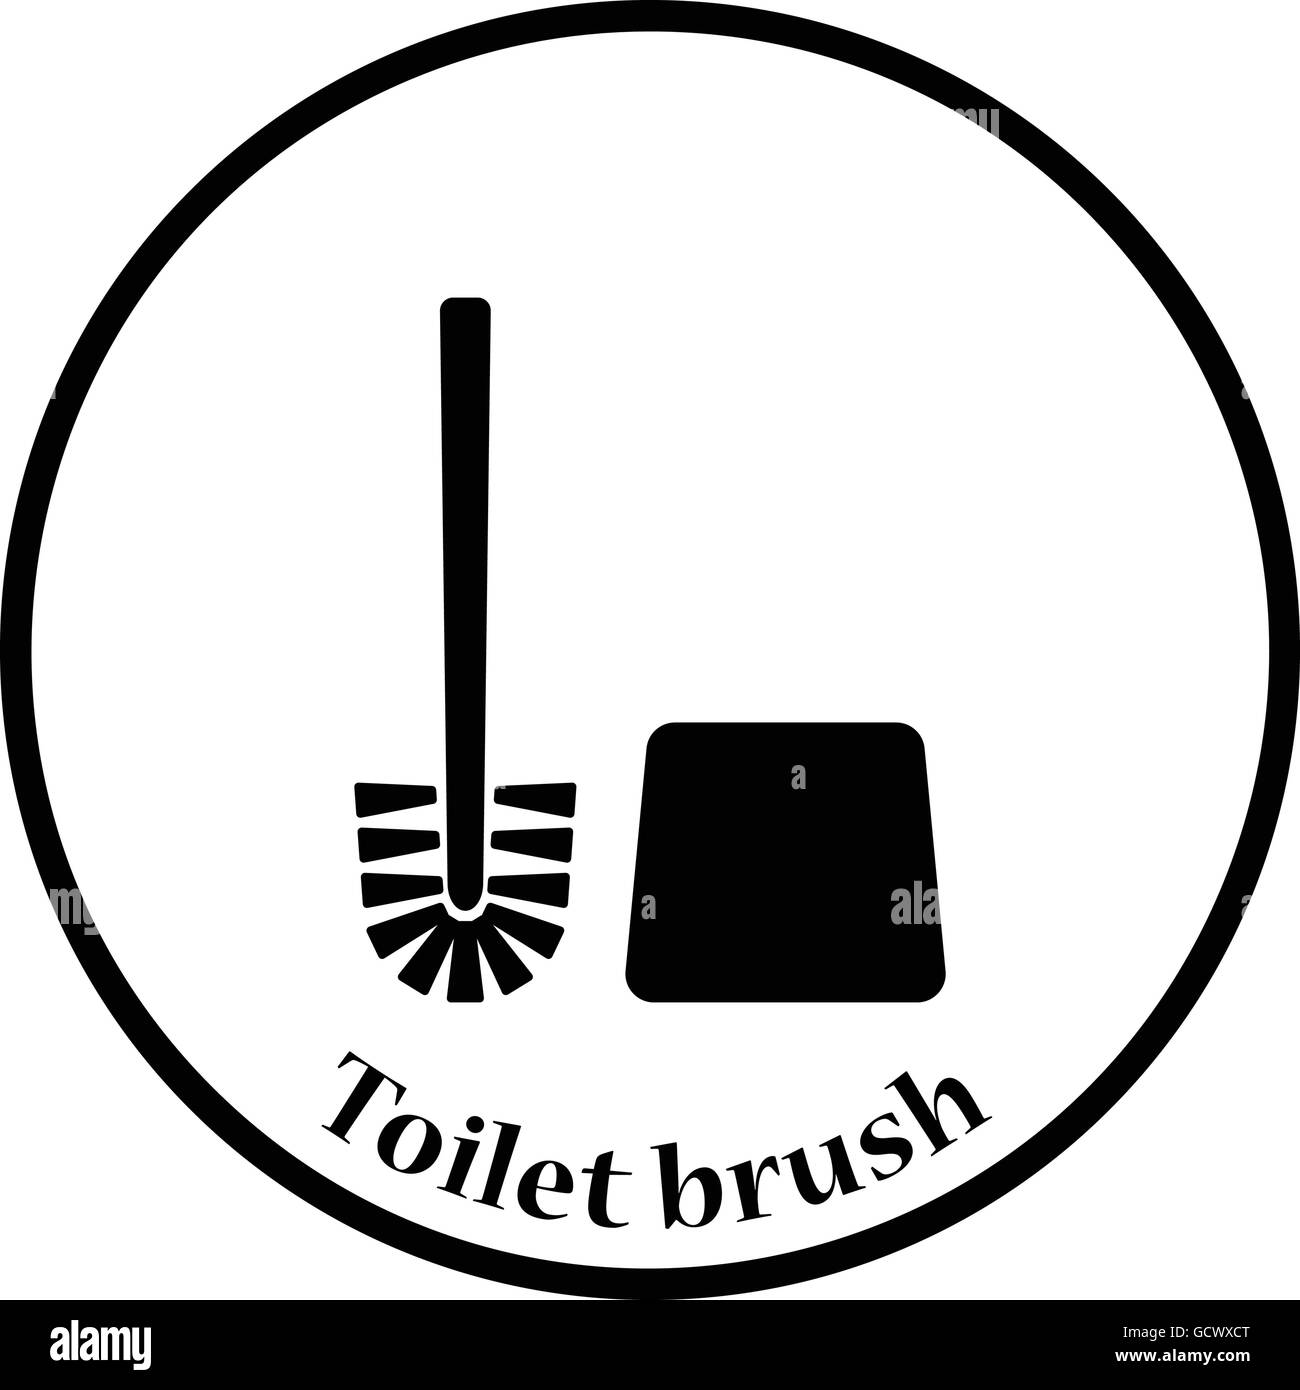 Toilet brush icon. Thin circle design. Vector illustration. Stock Vector